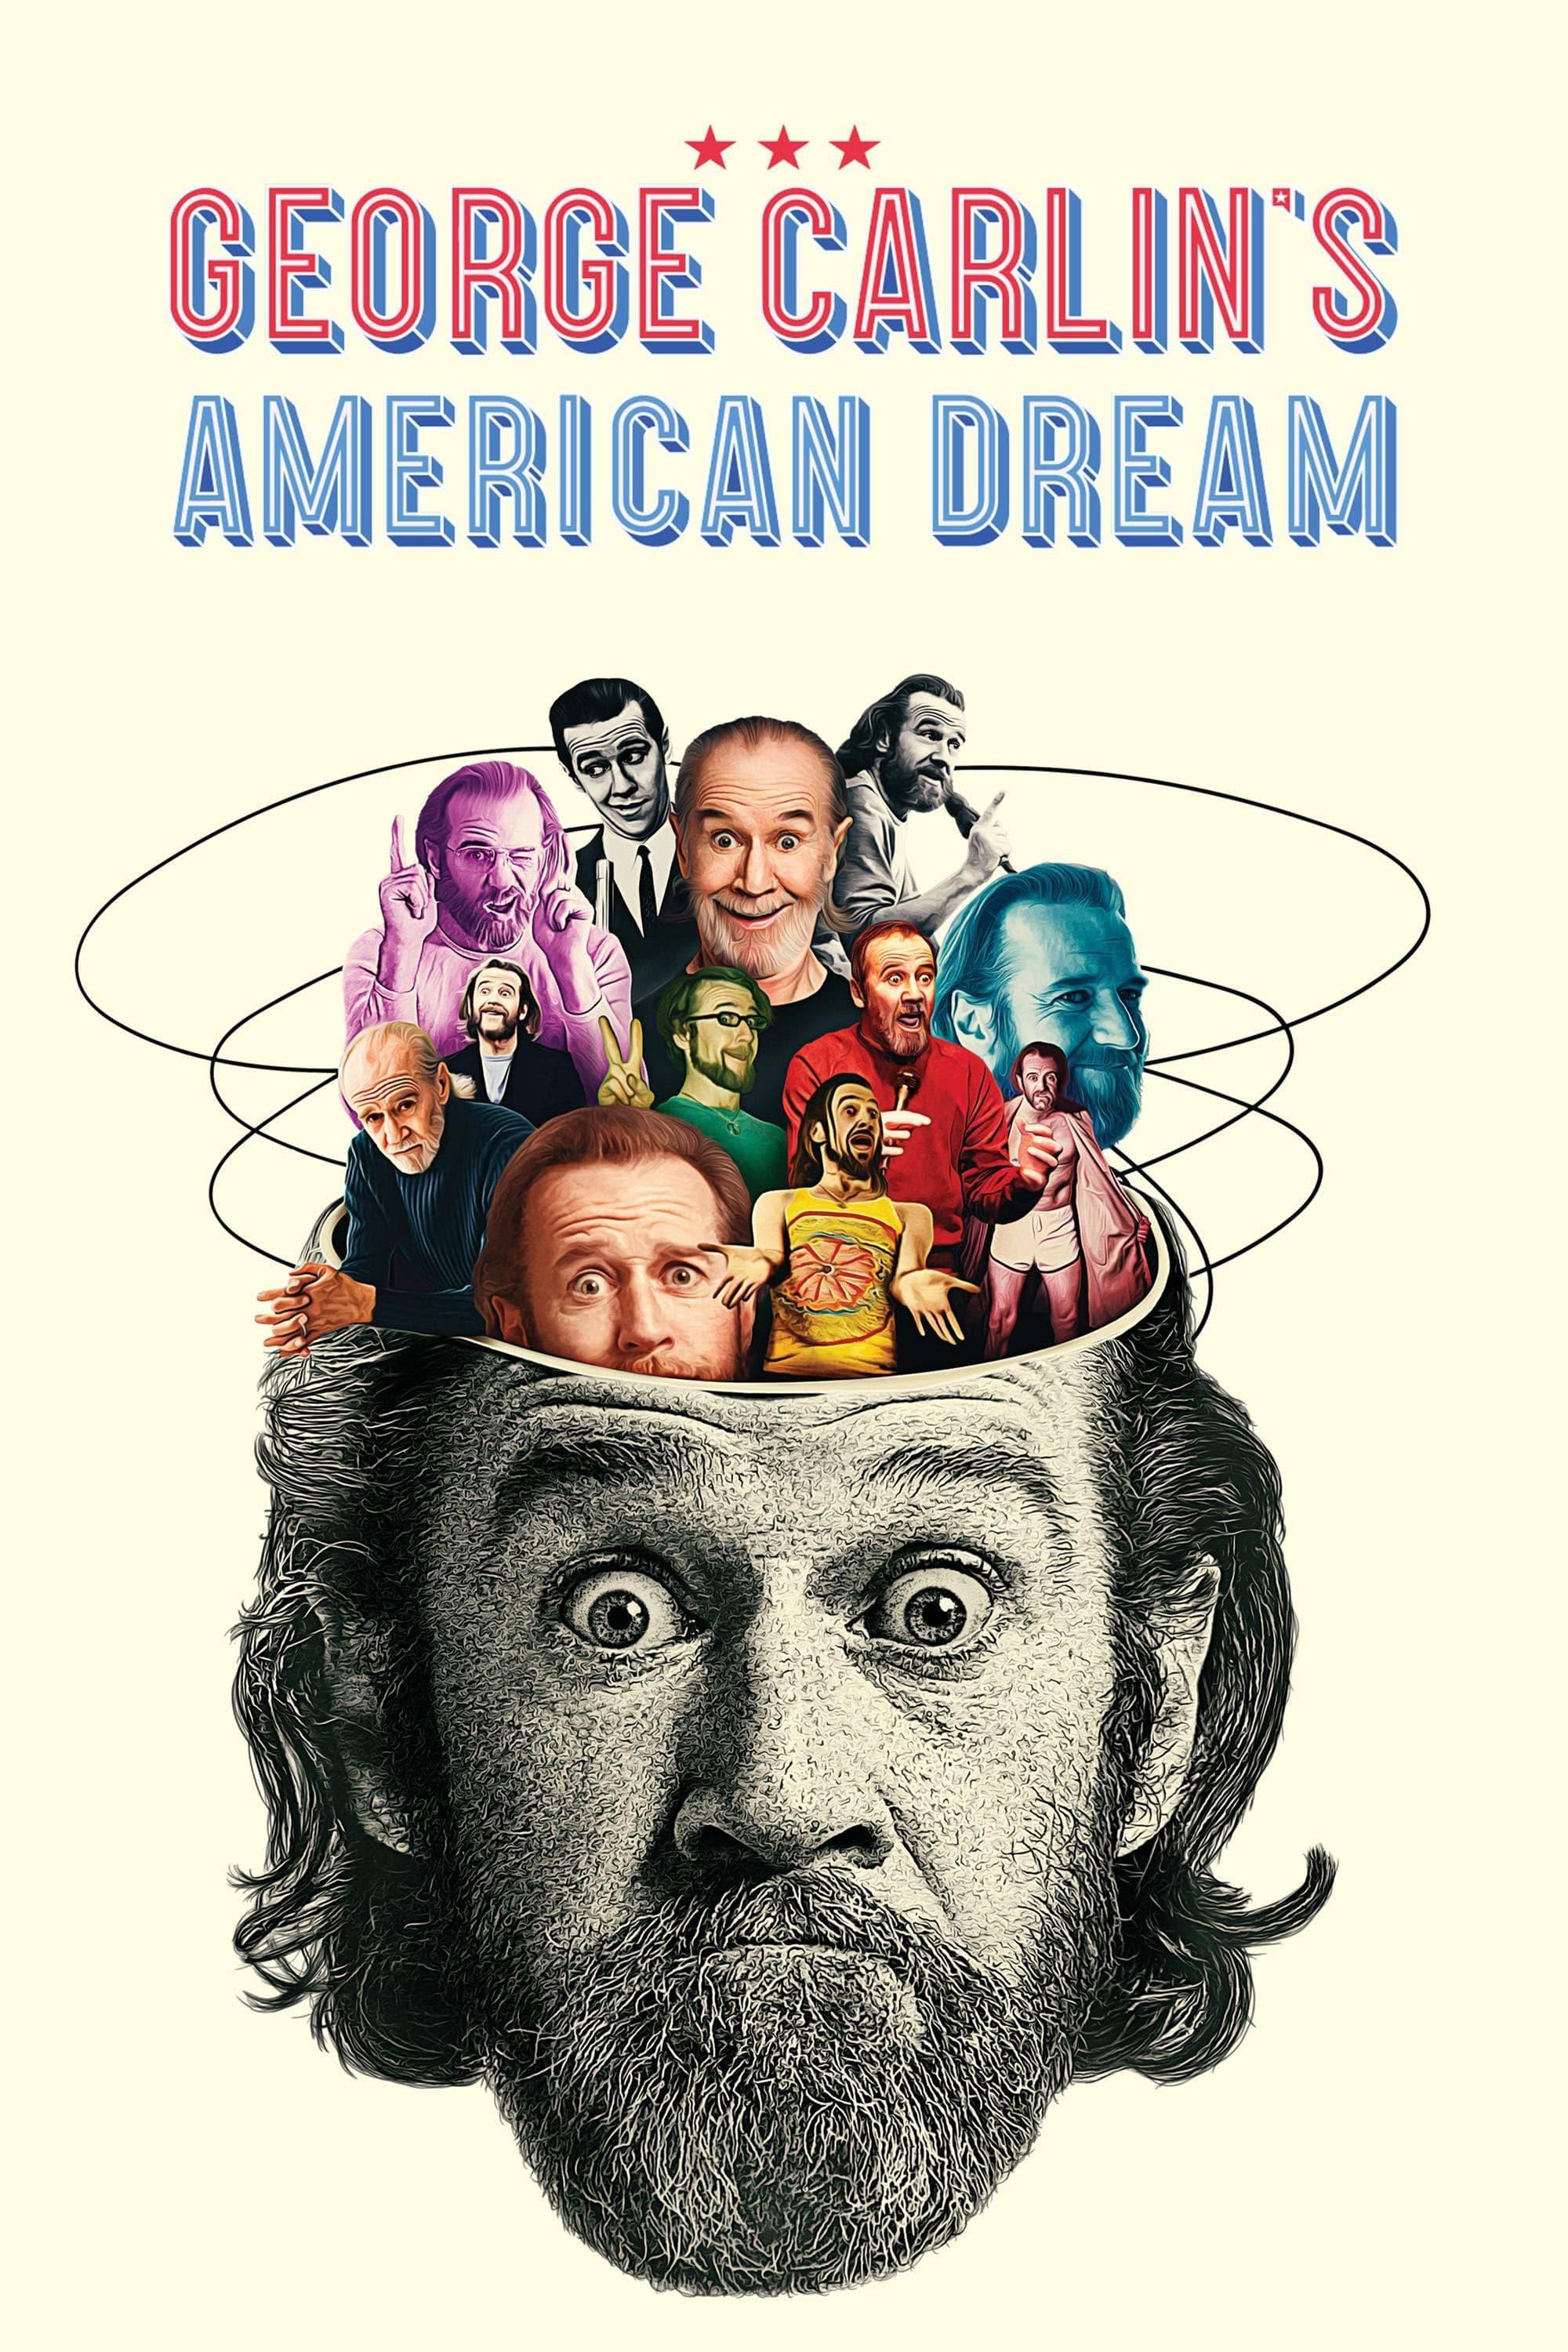 George Carlin's American Dream poster